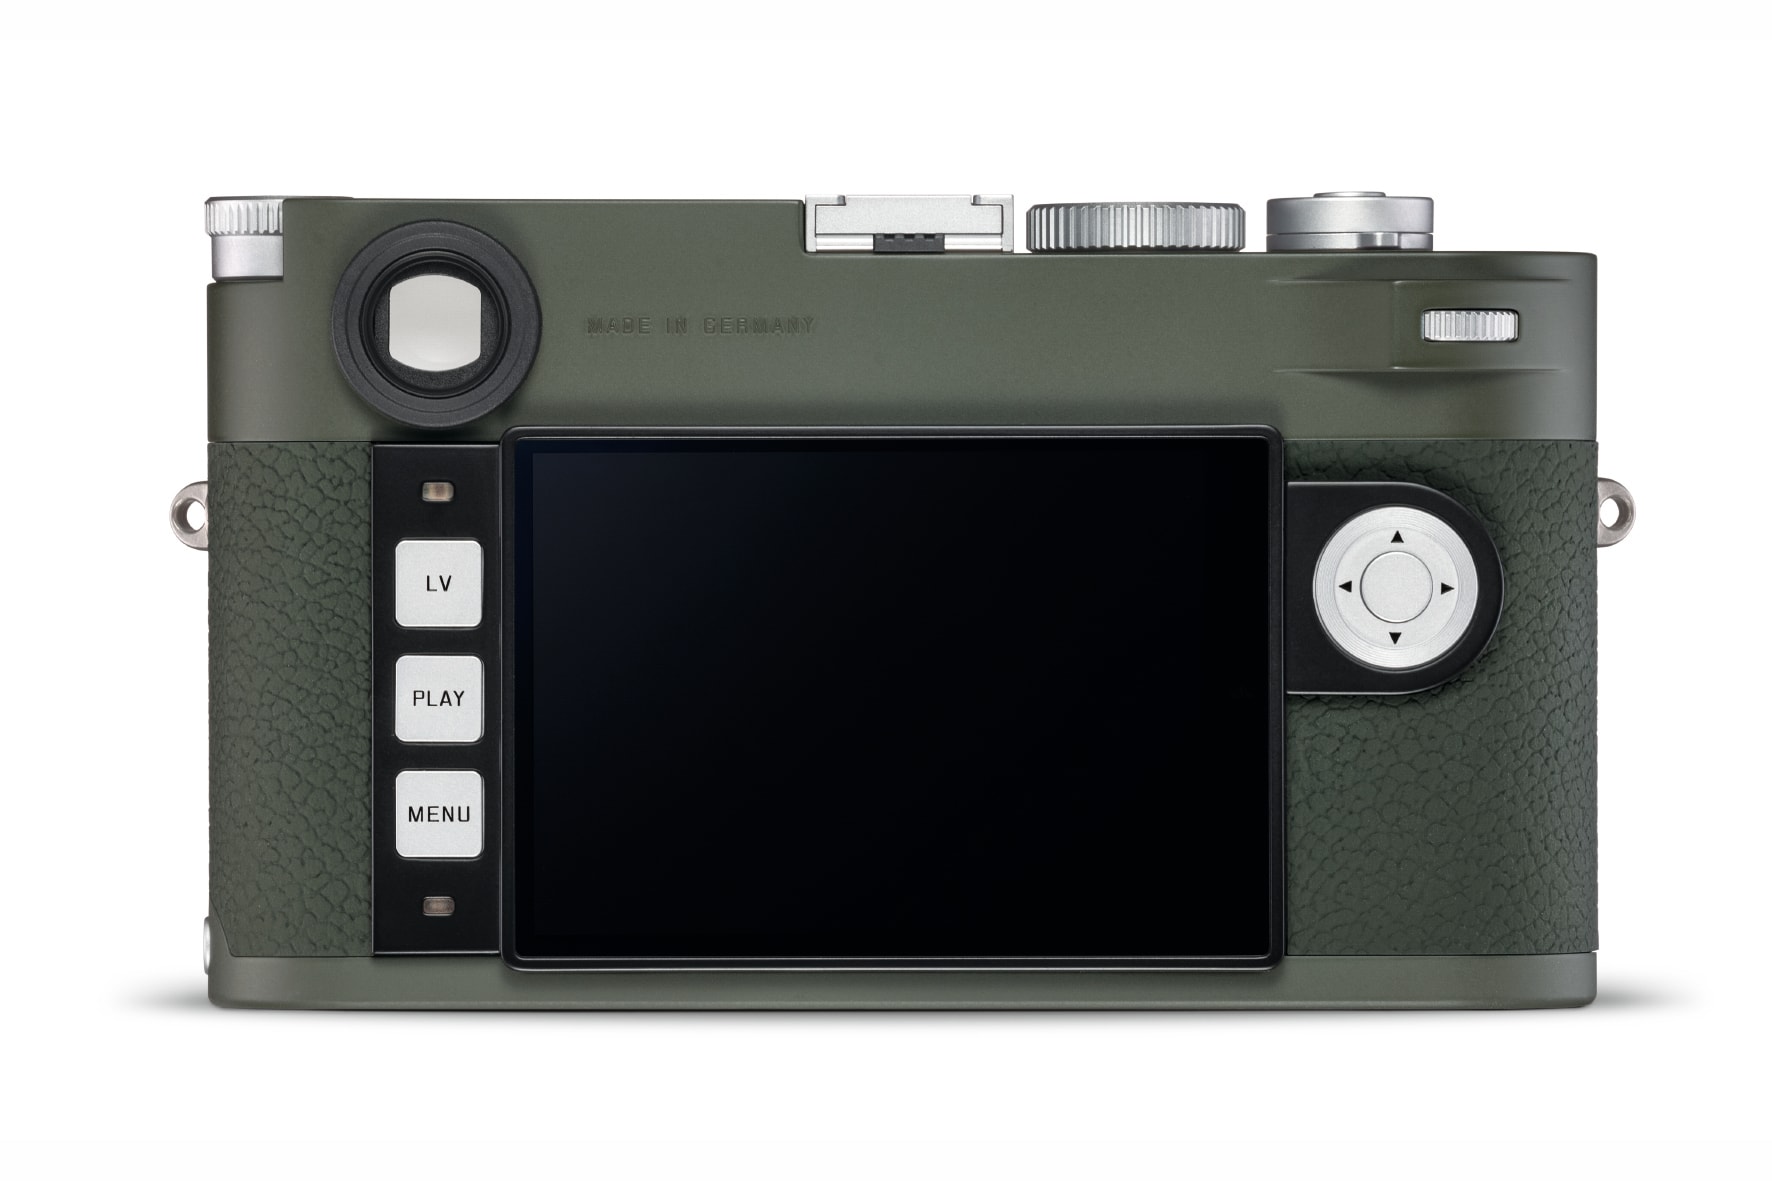 Leica 推出 M10-P「Safari」相機限量版套裝